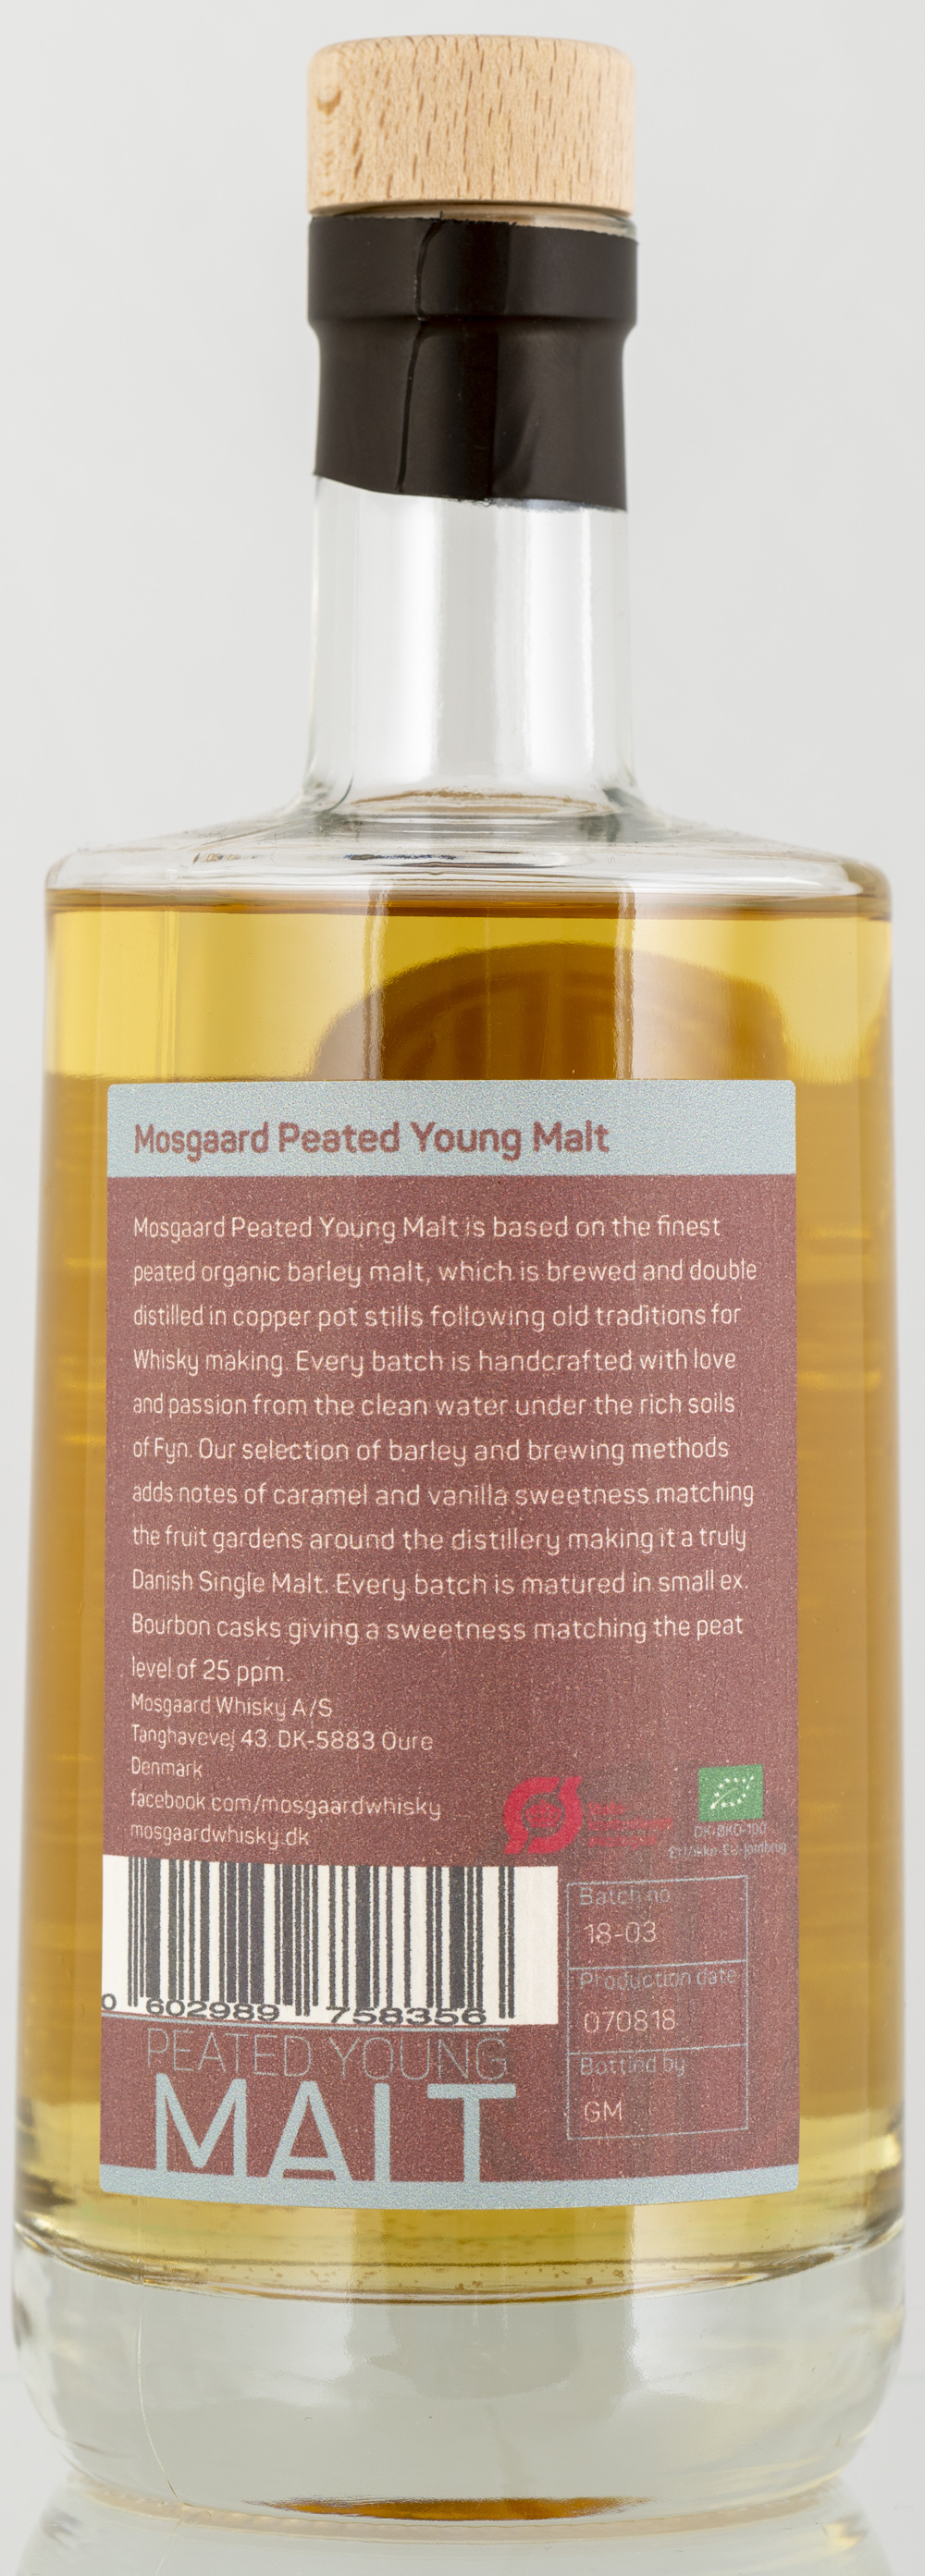 Billede: PHC_2580 - Mosgaard Organic Peated Young Malt - bottle back.jpg